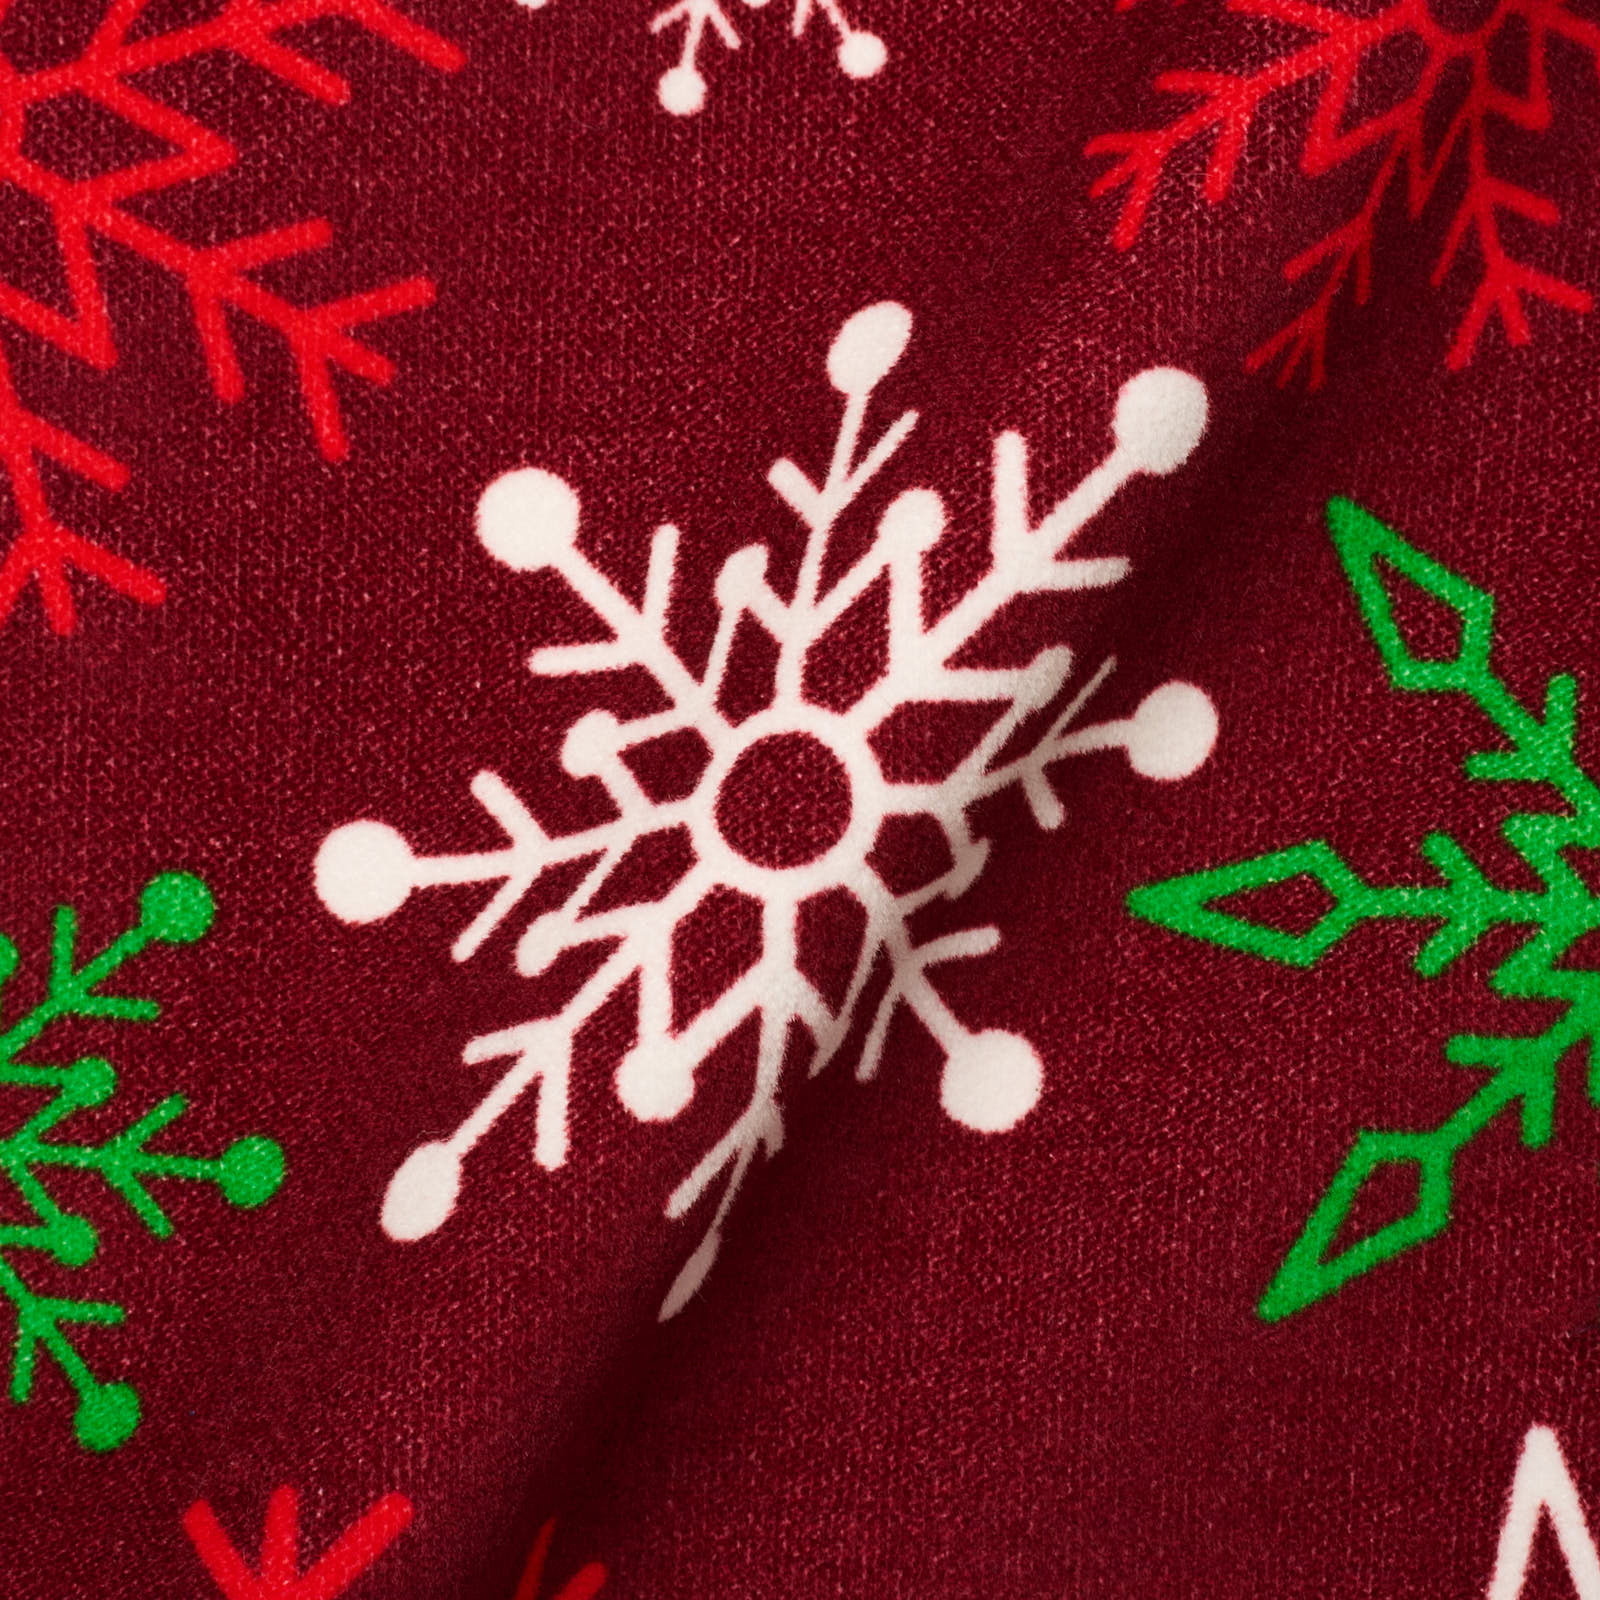 SARTORIA PARTENOPEA Red Christmas Design Cotton-Elastane Jacket EU 50 NEW US 40 Current Model